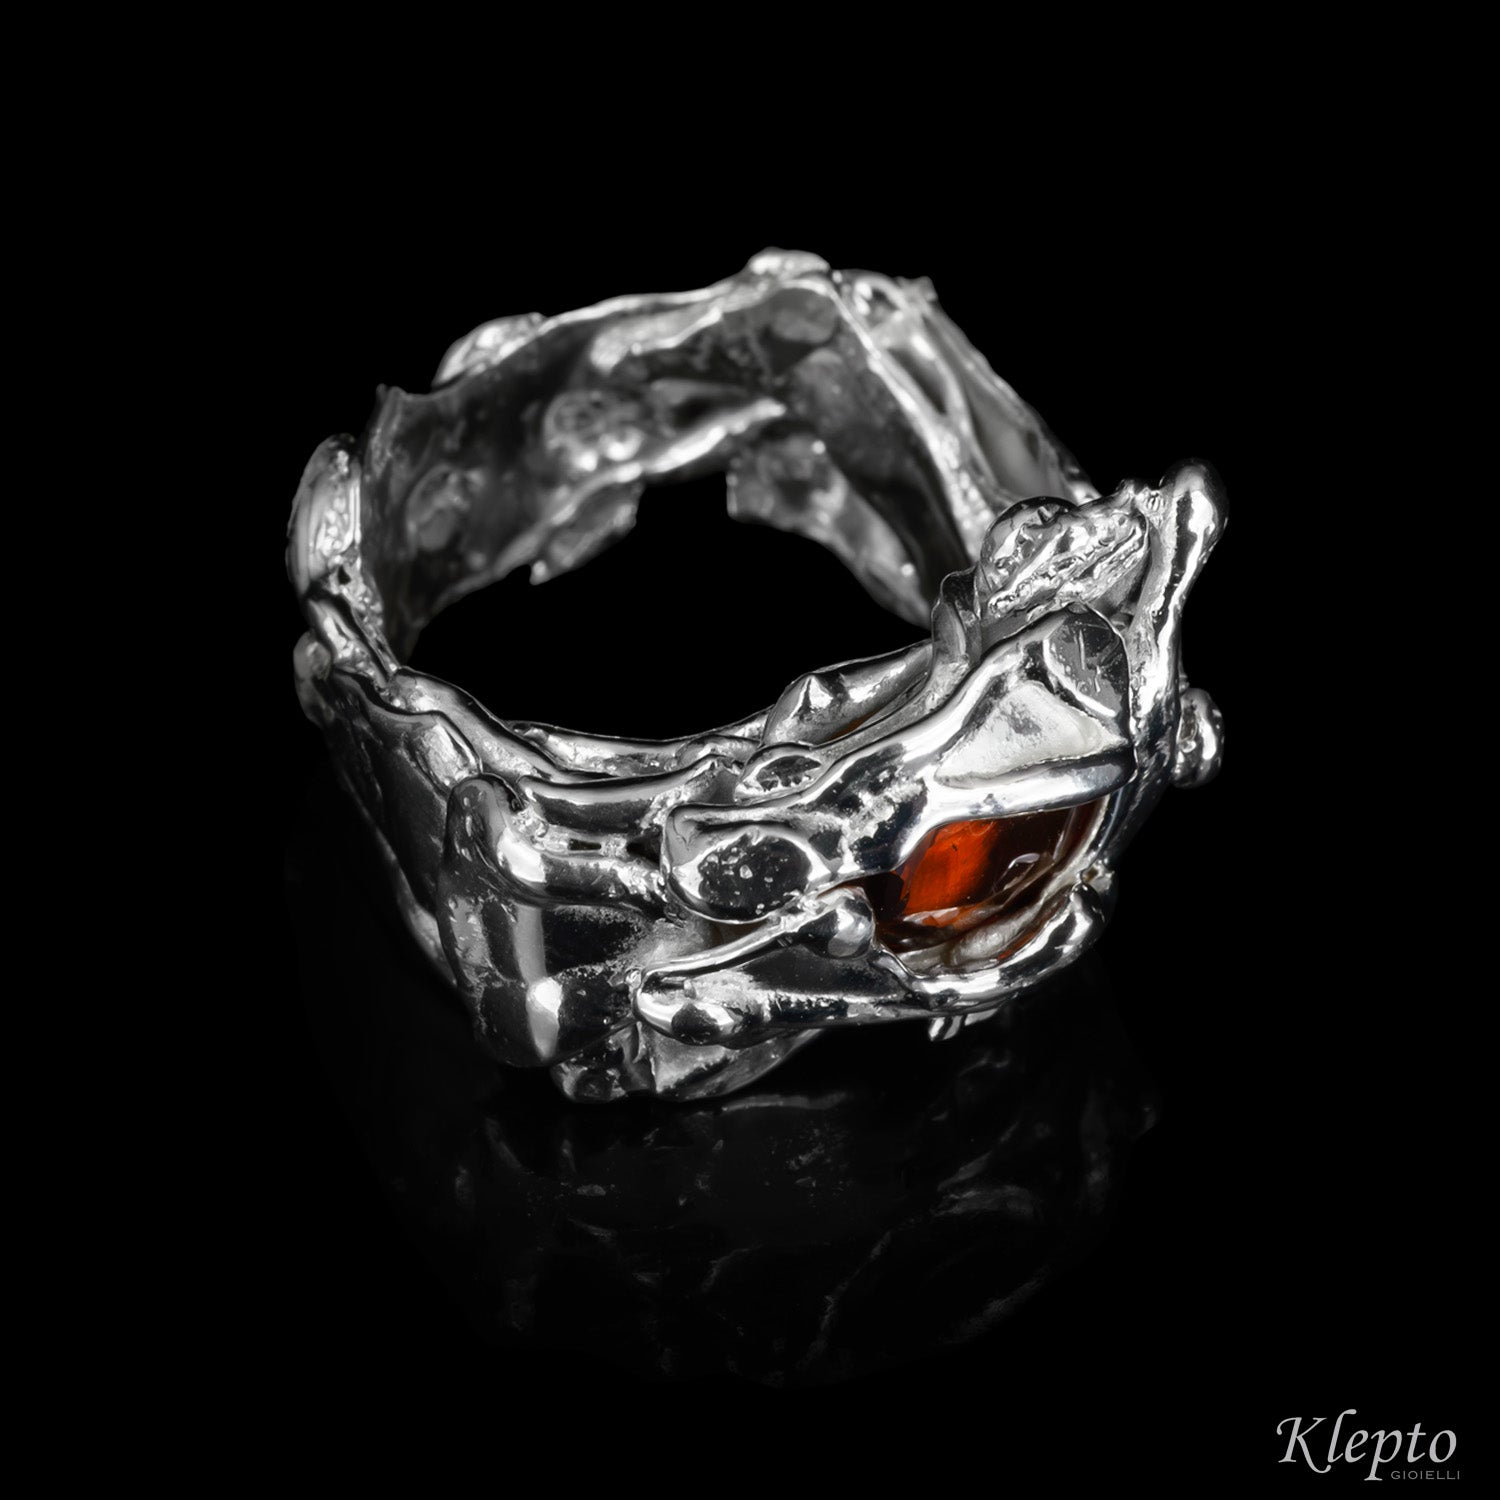 Silnova Silver Ring with Orange Garnet